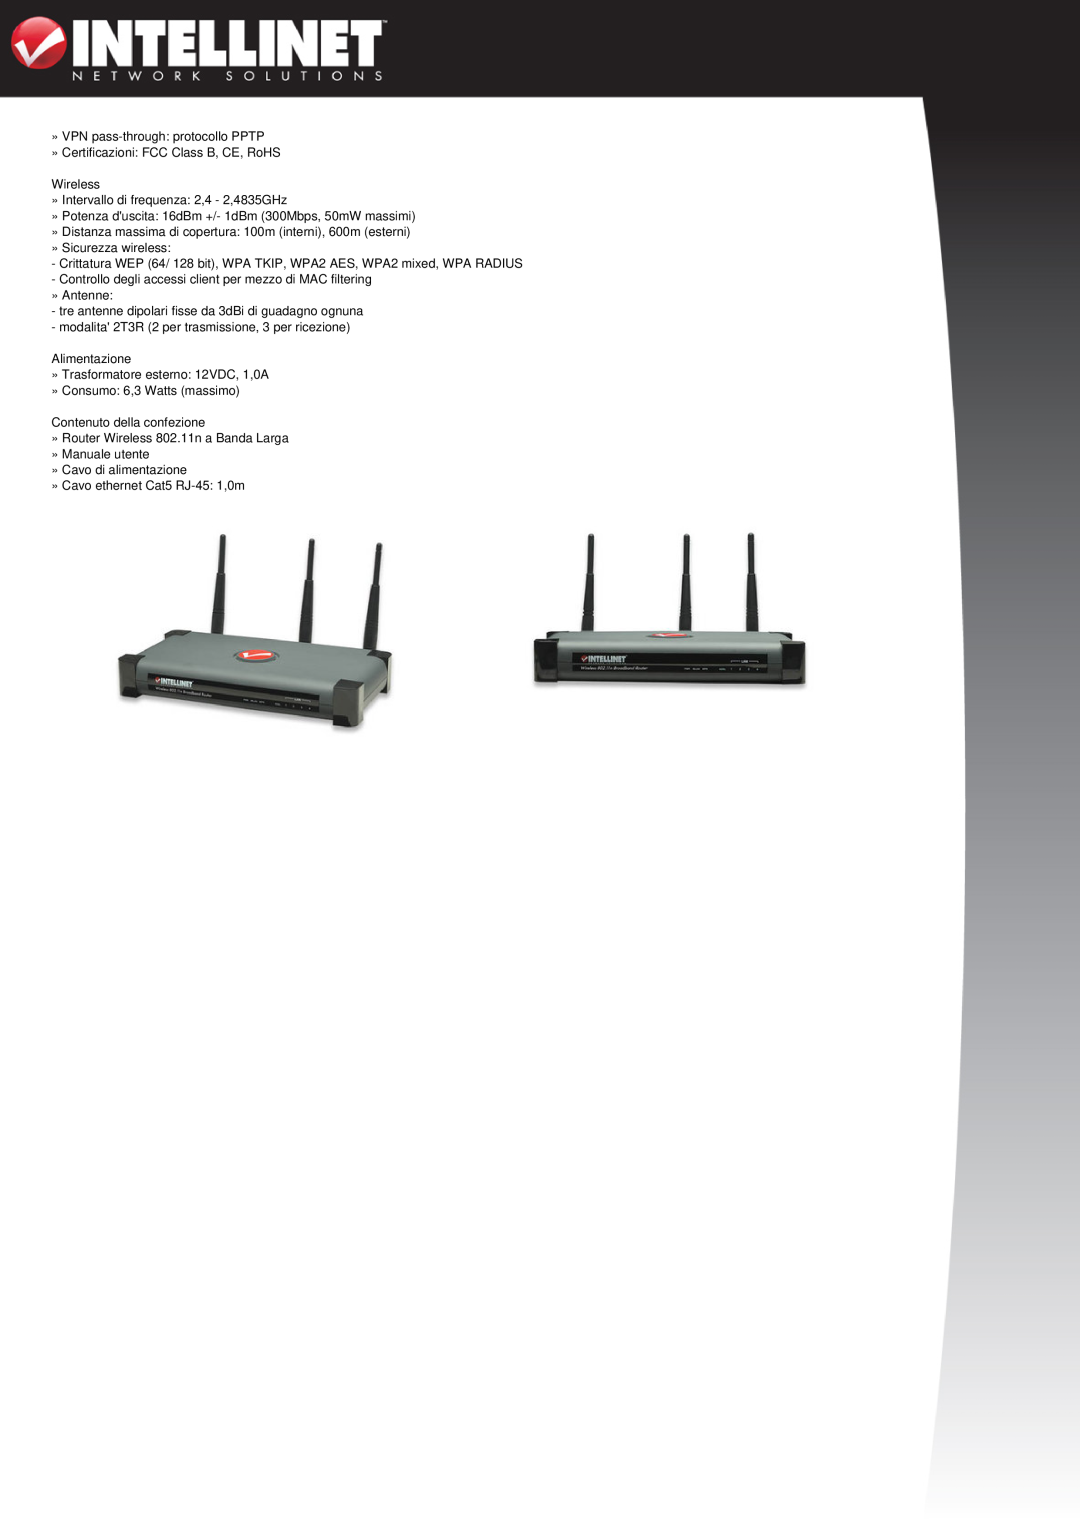 Intellinet Network Solutions 523967 » VPN pass-through protocollo PPTP, » Certificazioni FCC Class B, CE, RoHS Wireless 